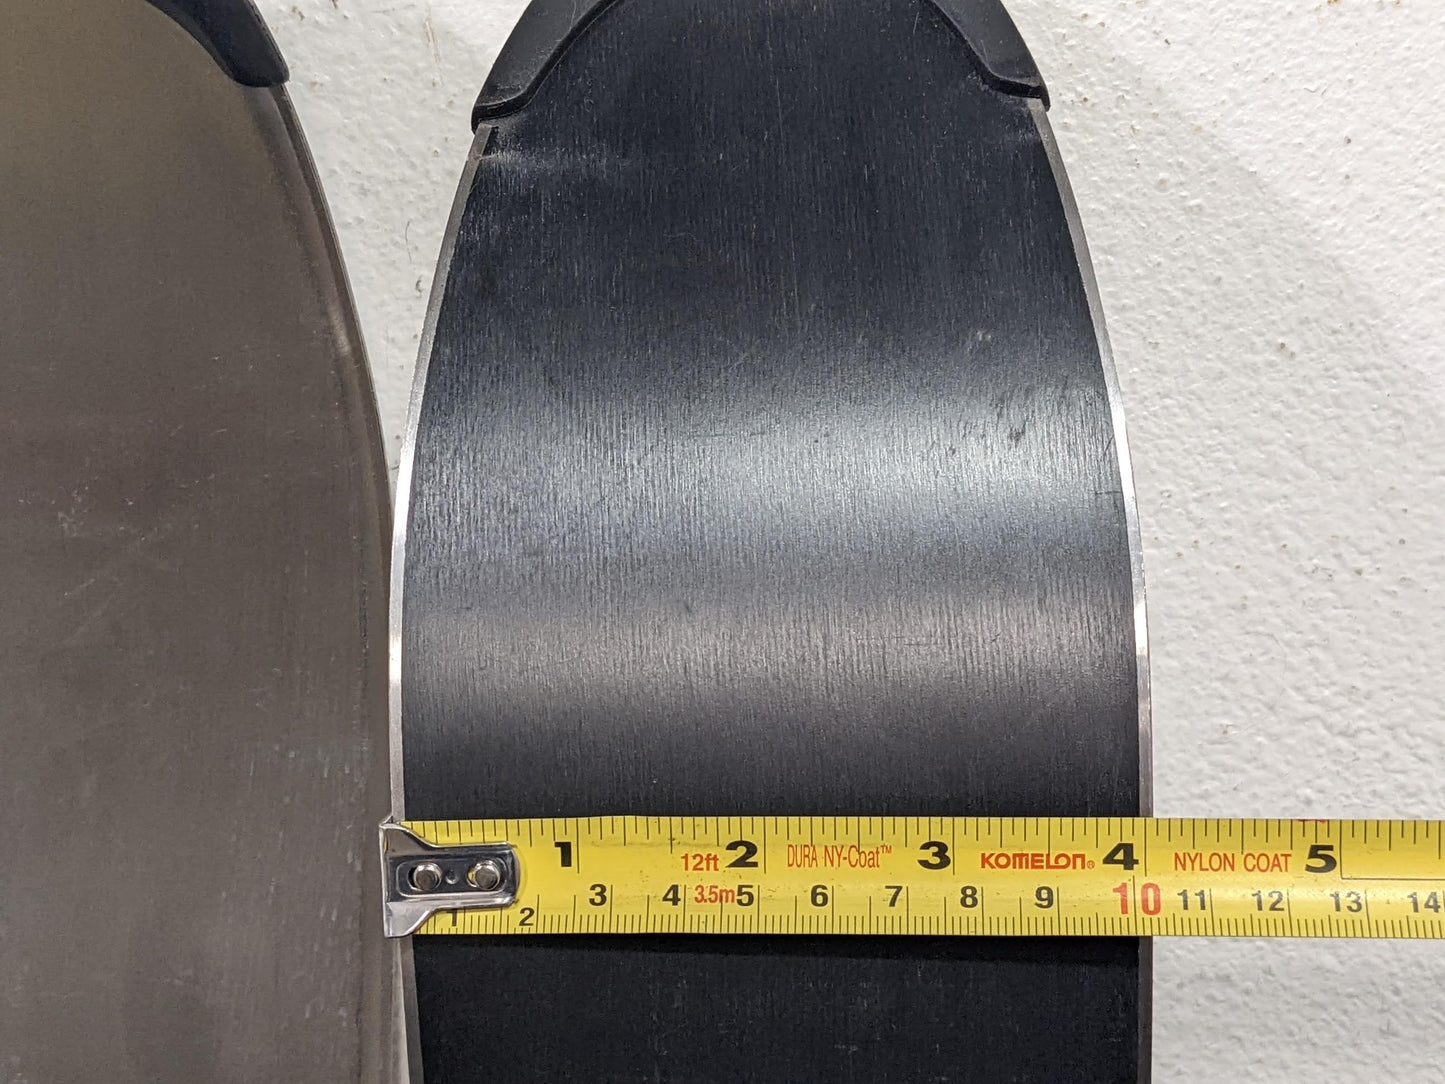 Volant Epic Skis w/Tyrolia Bindings Size 162 cm Silver Used